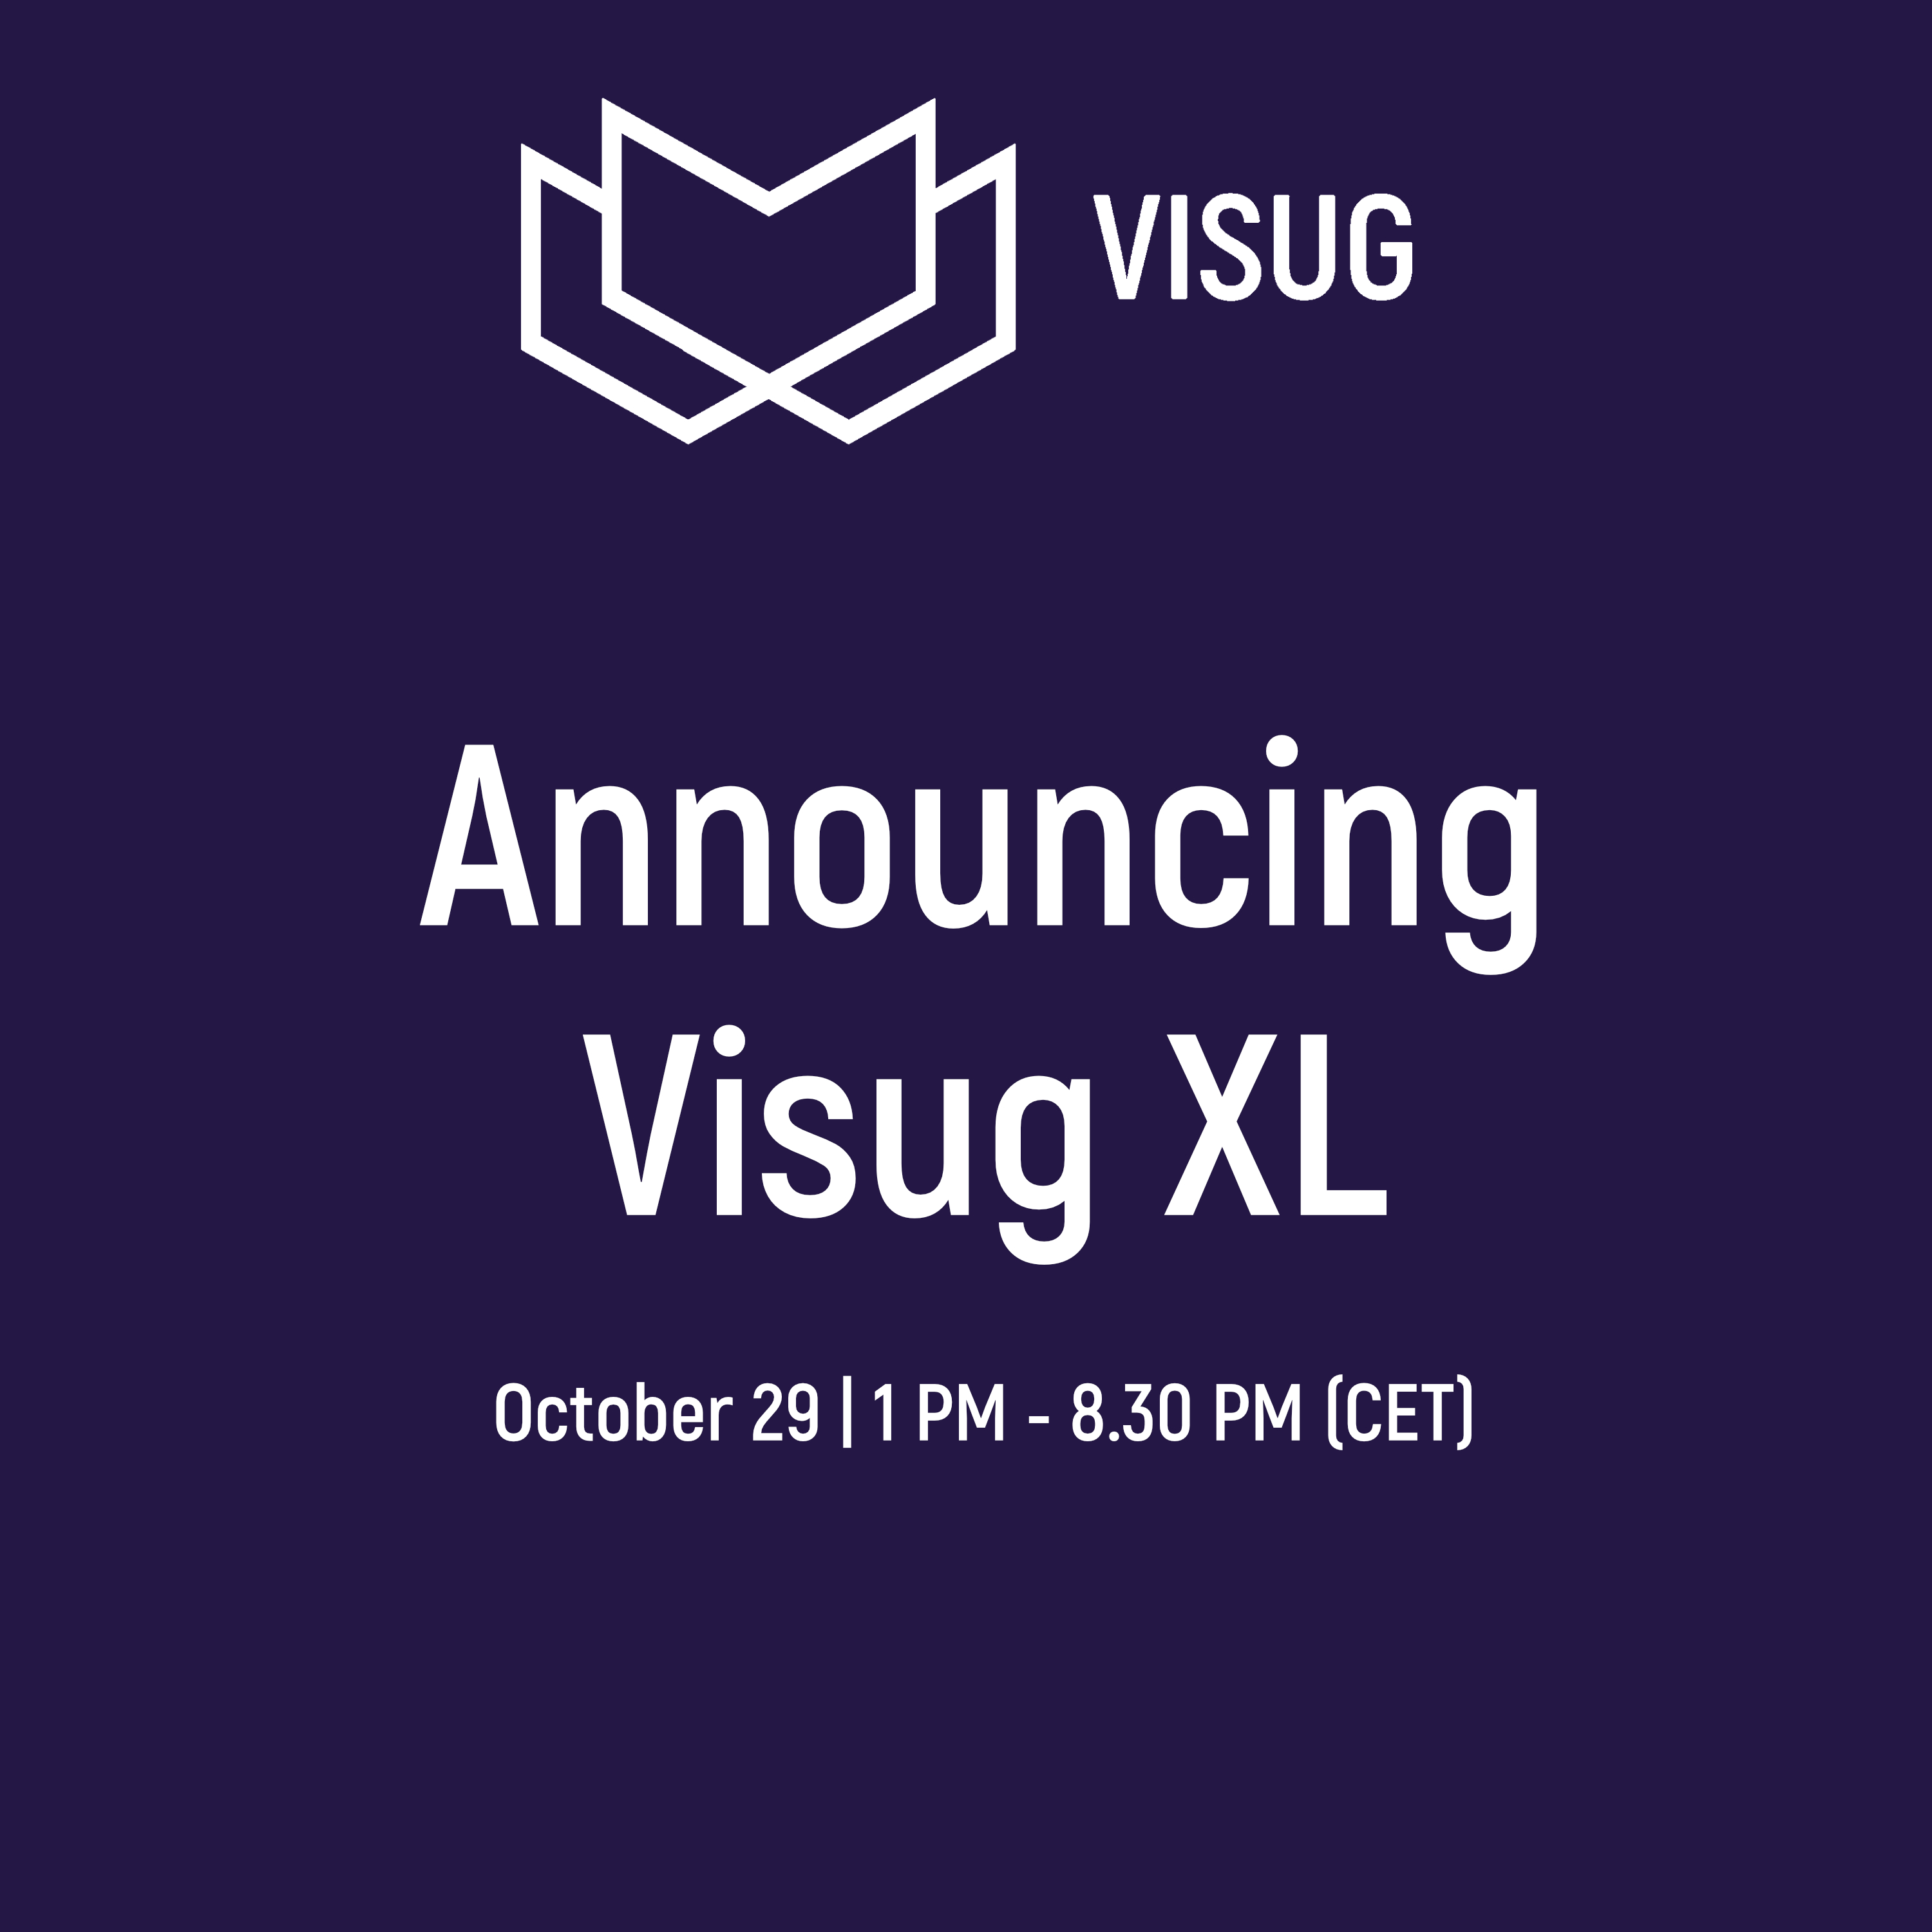 Announcing Visug XL